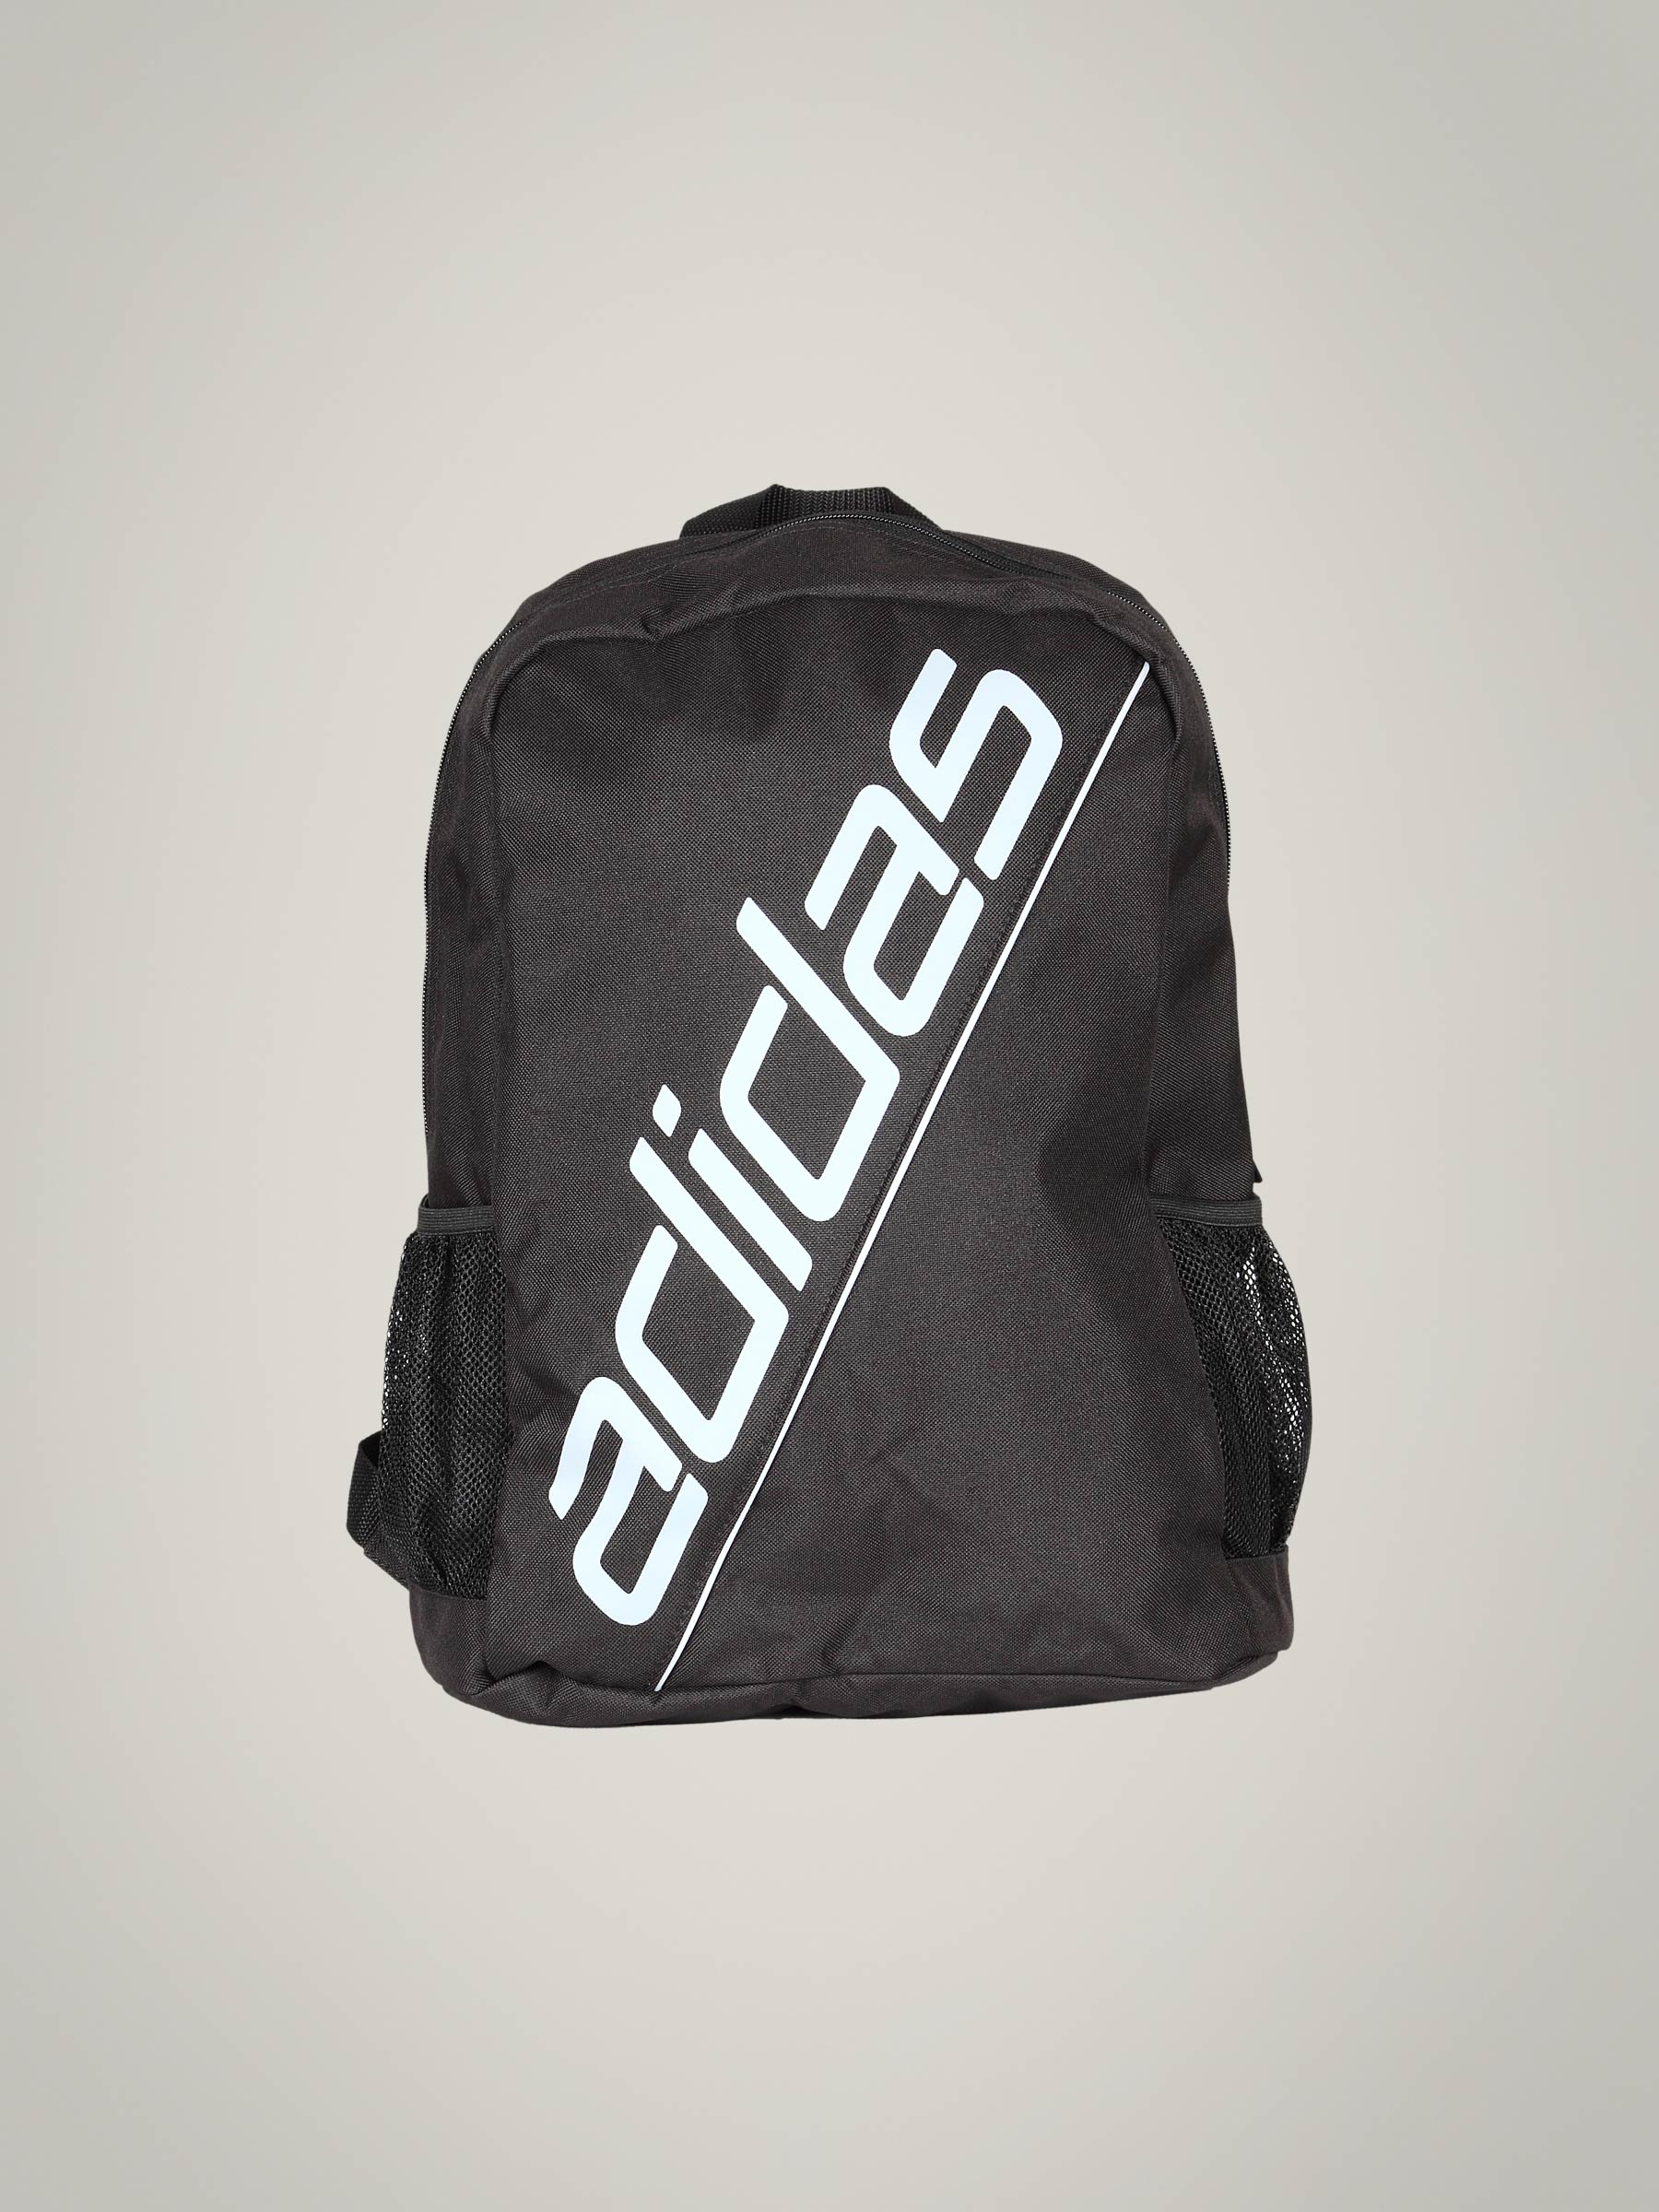 ADIDAS Unisex Ess Black Silver Backpack